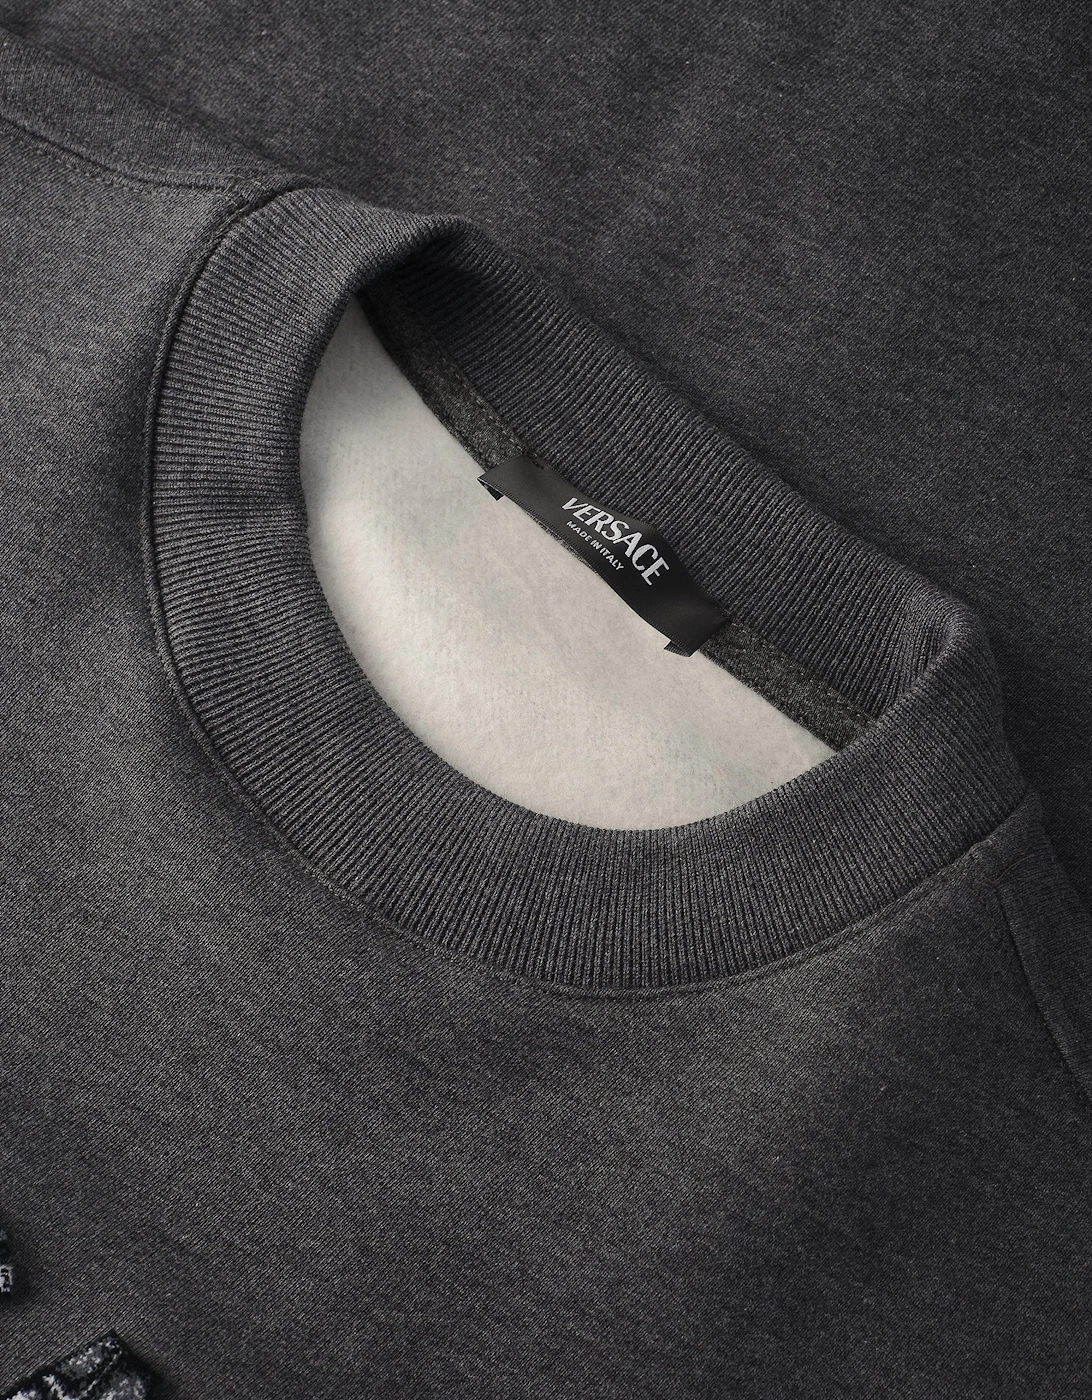 Vintage Branding Sweatshirt Charcoal